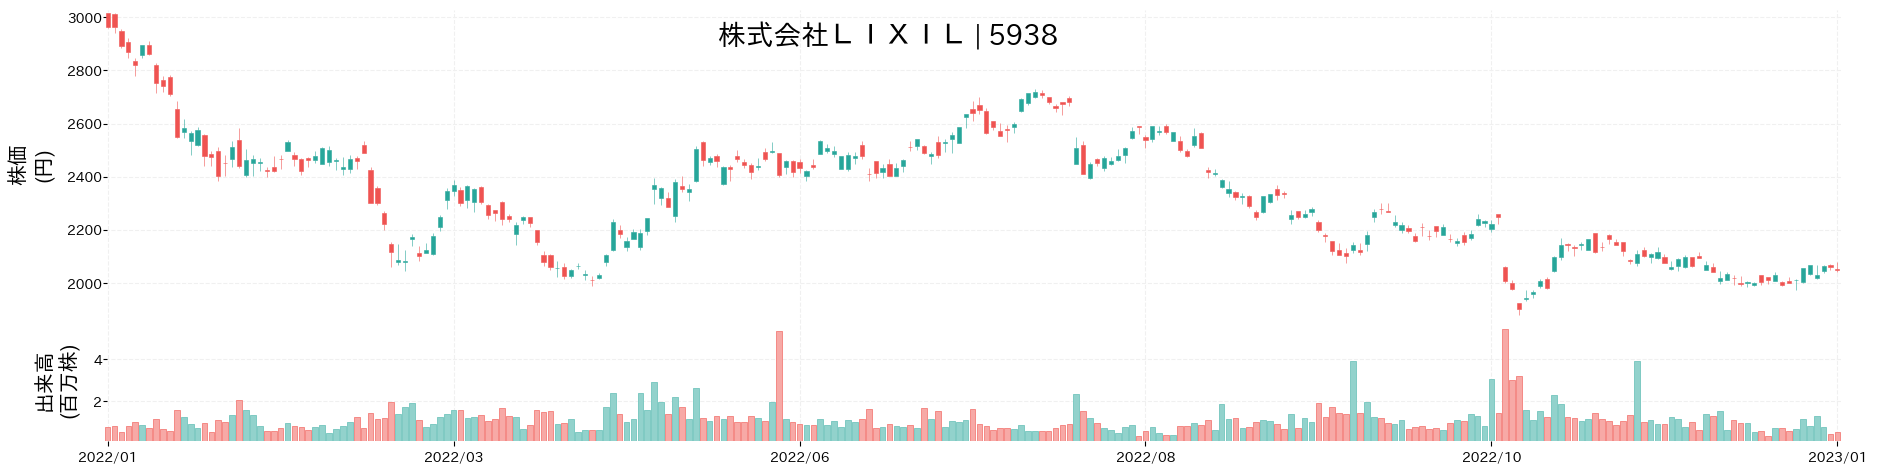 LIXILの株価推移(2022)